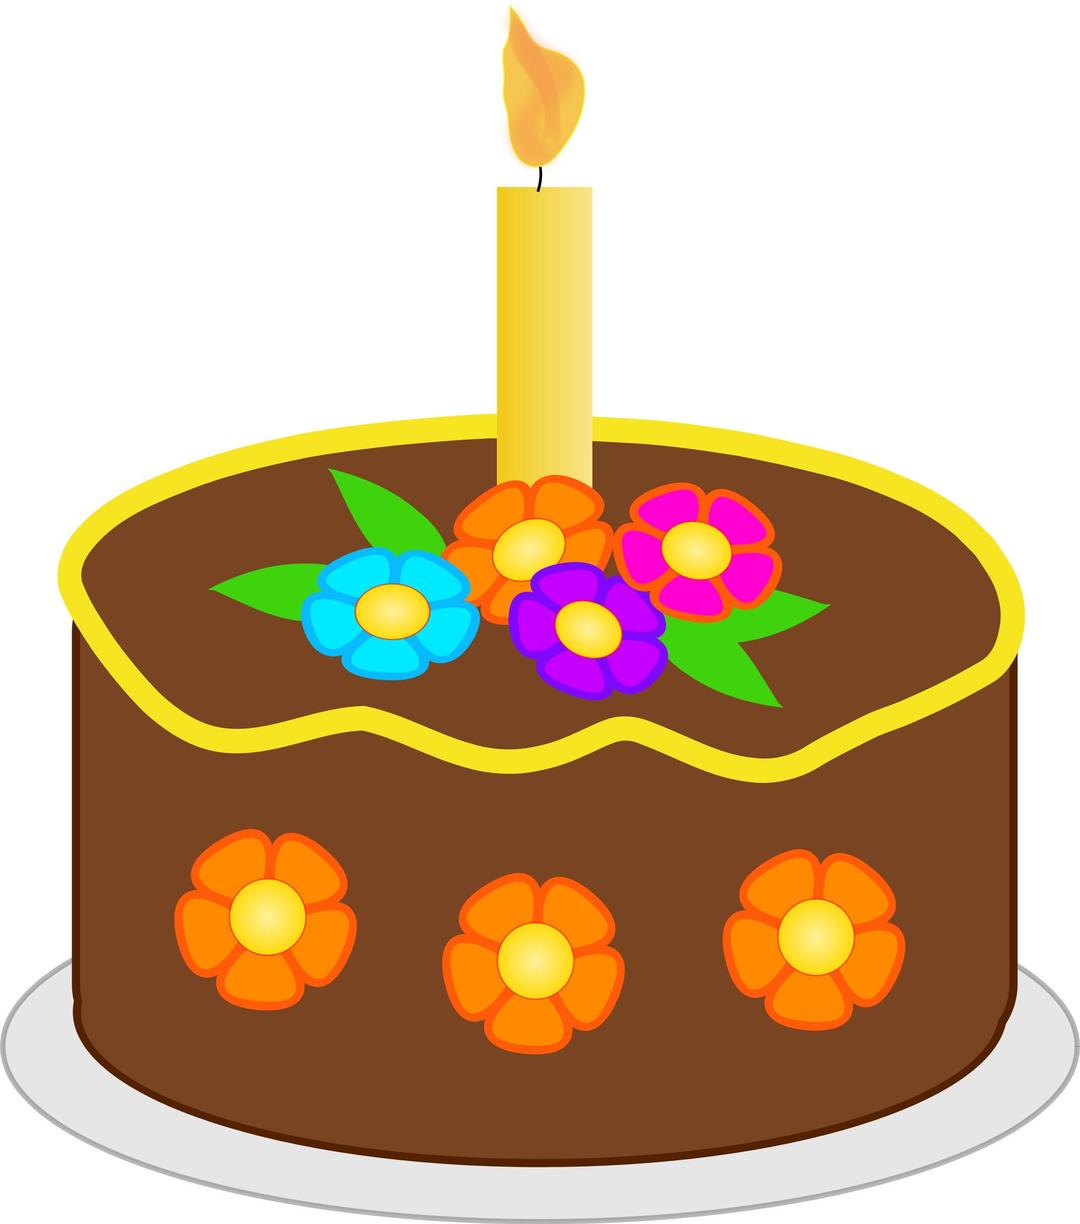 Chocolate Birthday Cake(brown) png transparent